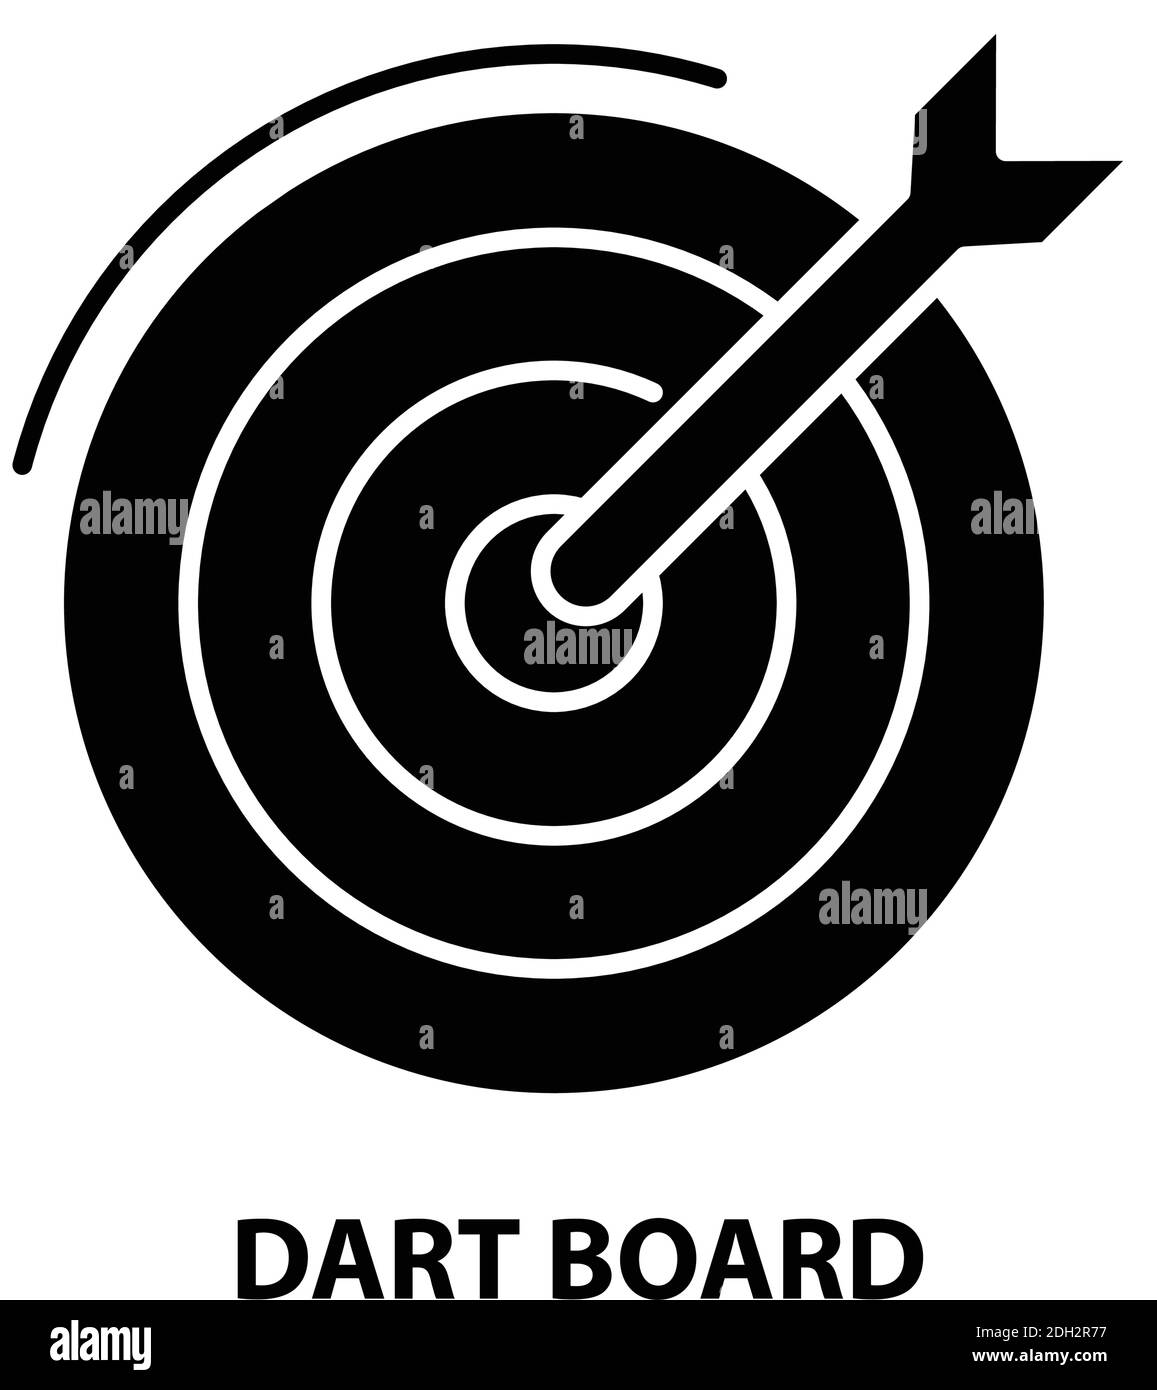 dart board icon, black vector sign with editable strokes, concept illustration Stock Vector